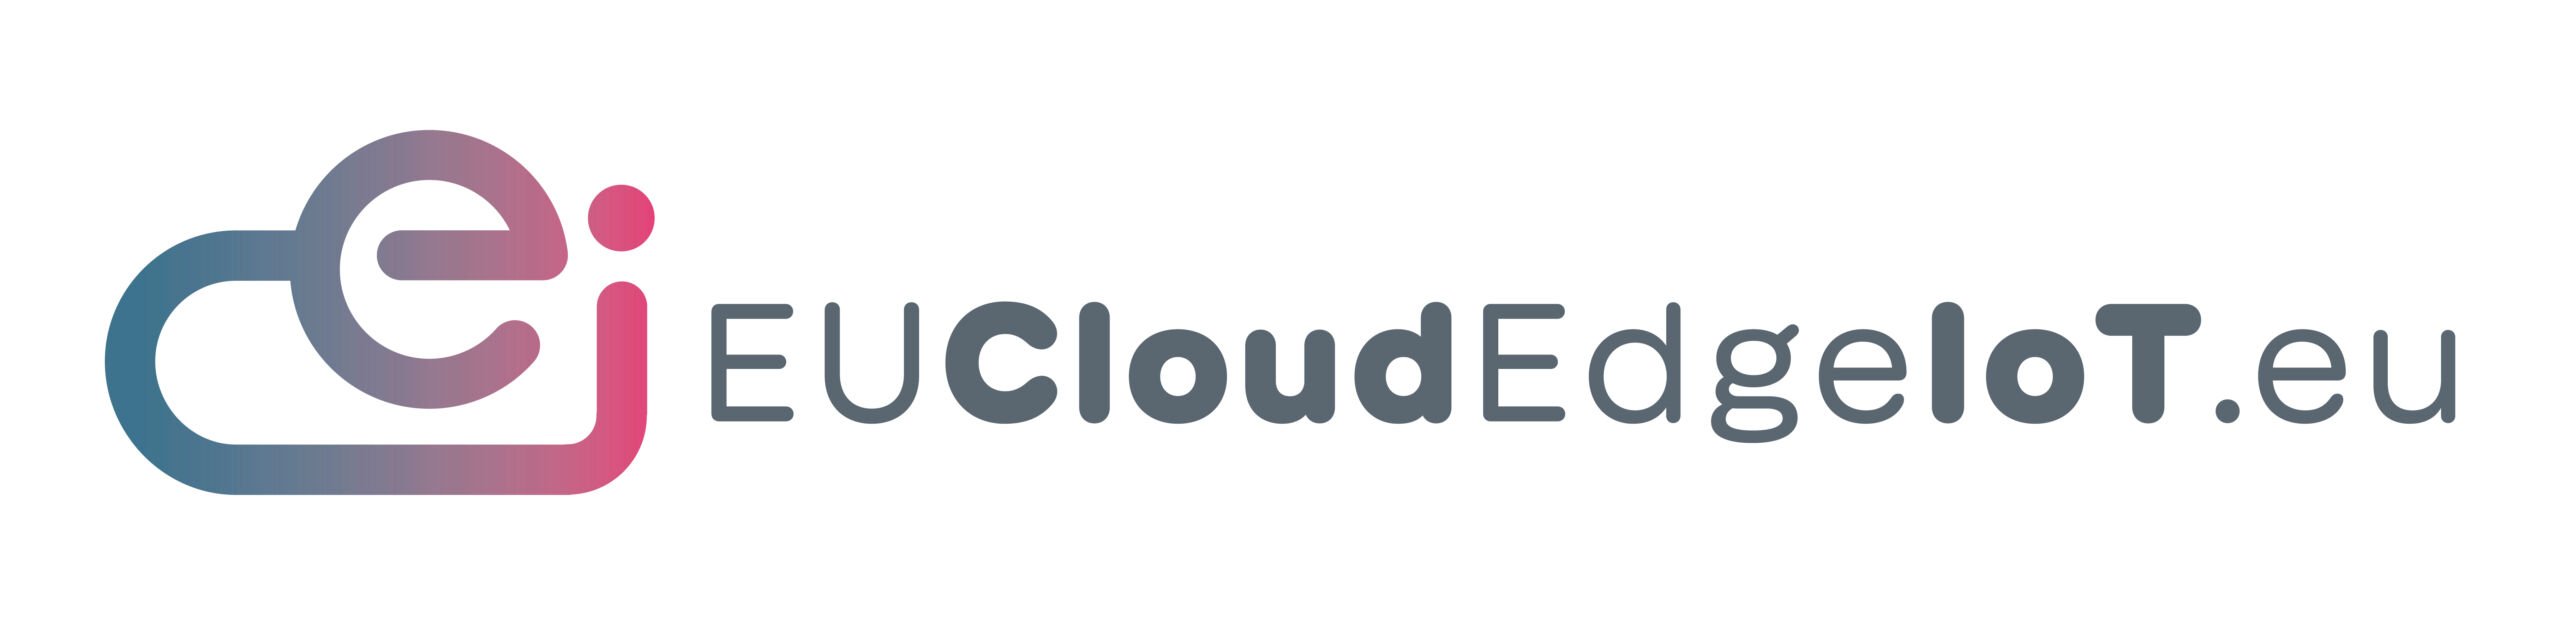 Logo eCEIc-extended colour